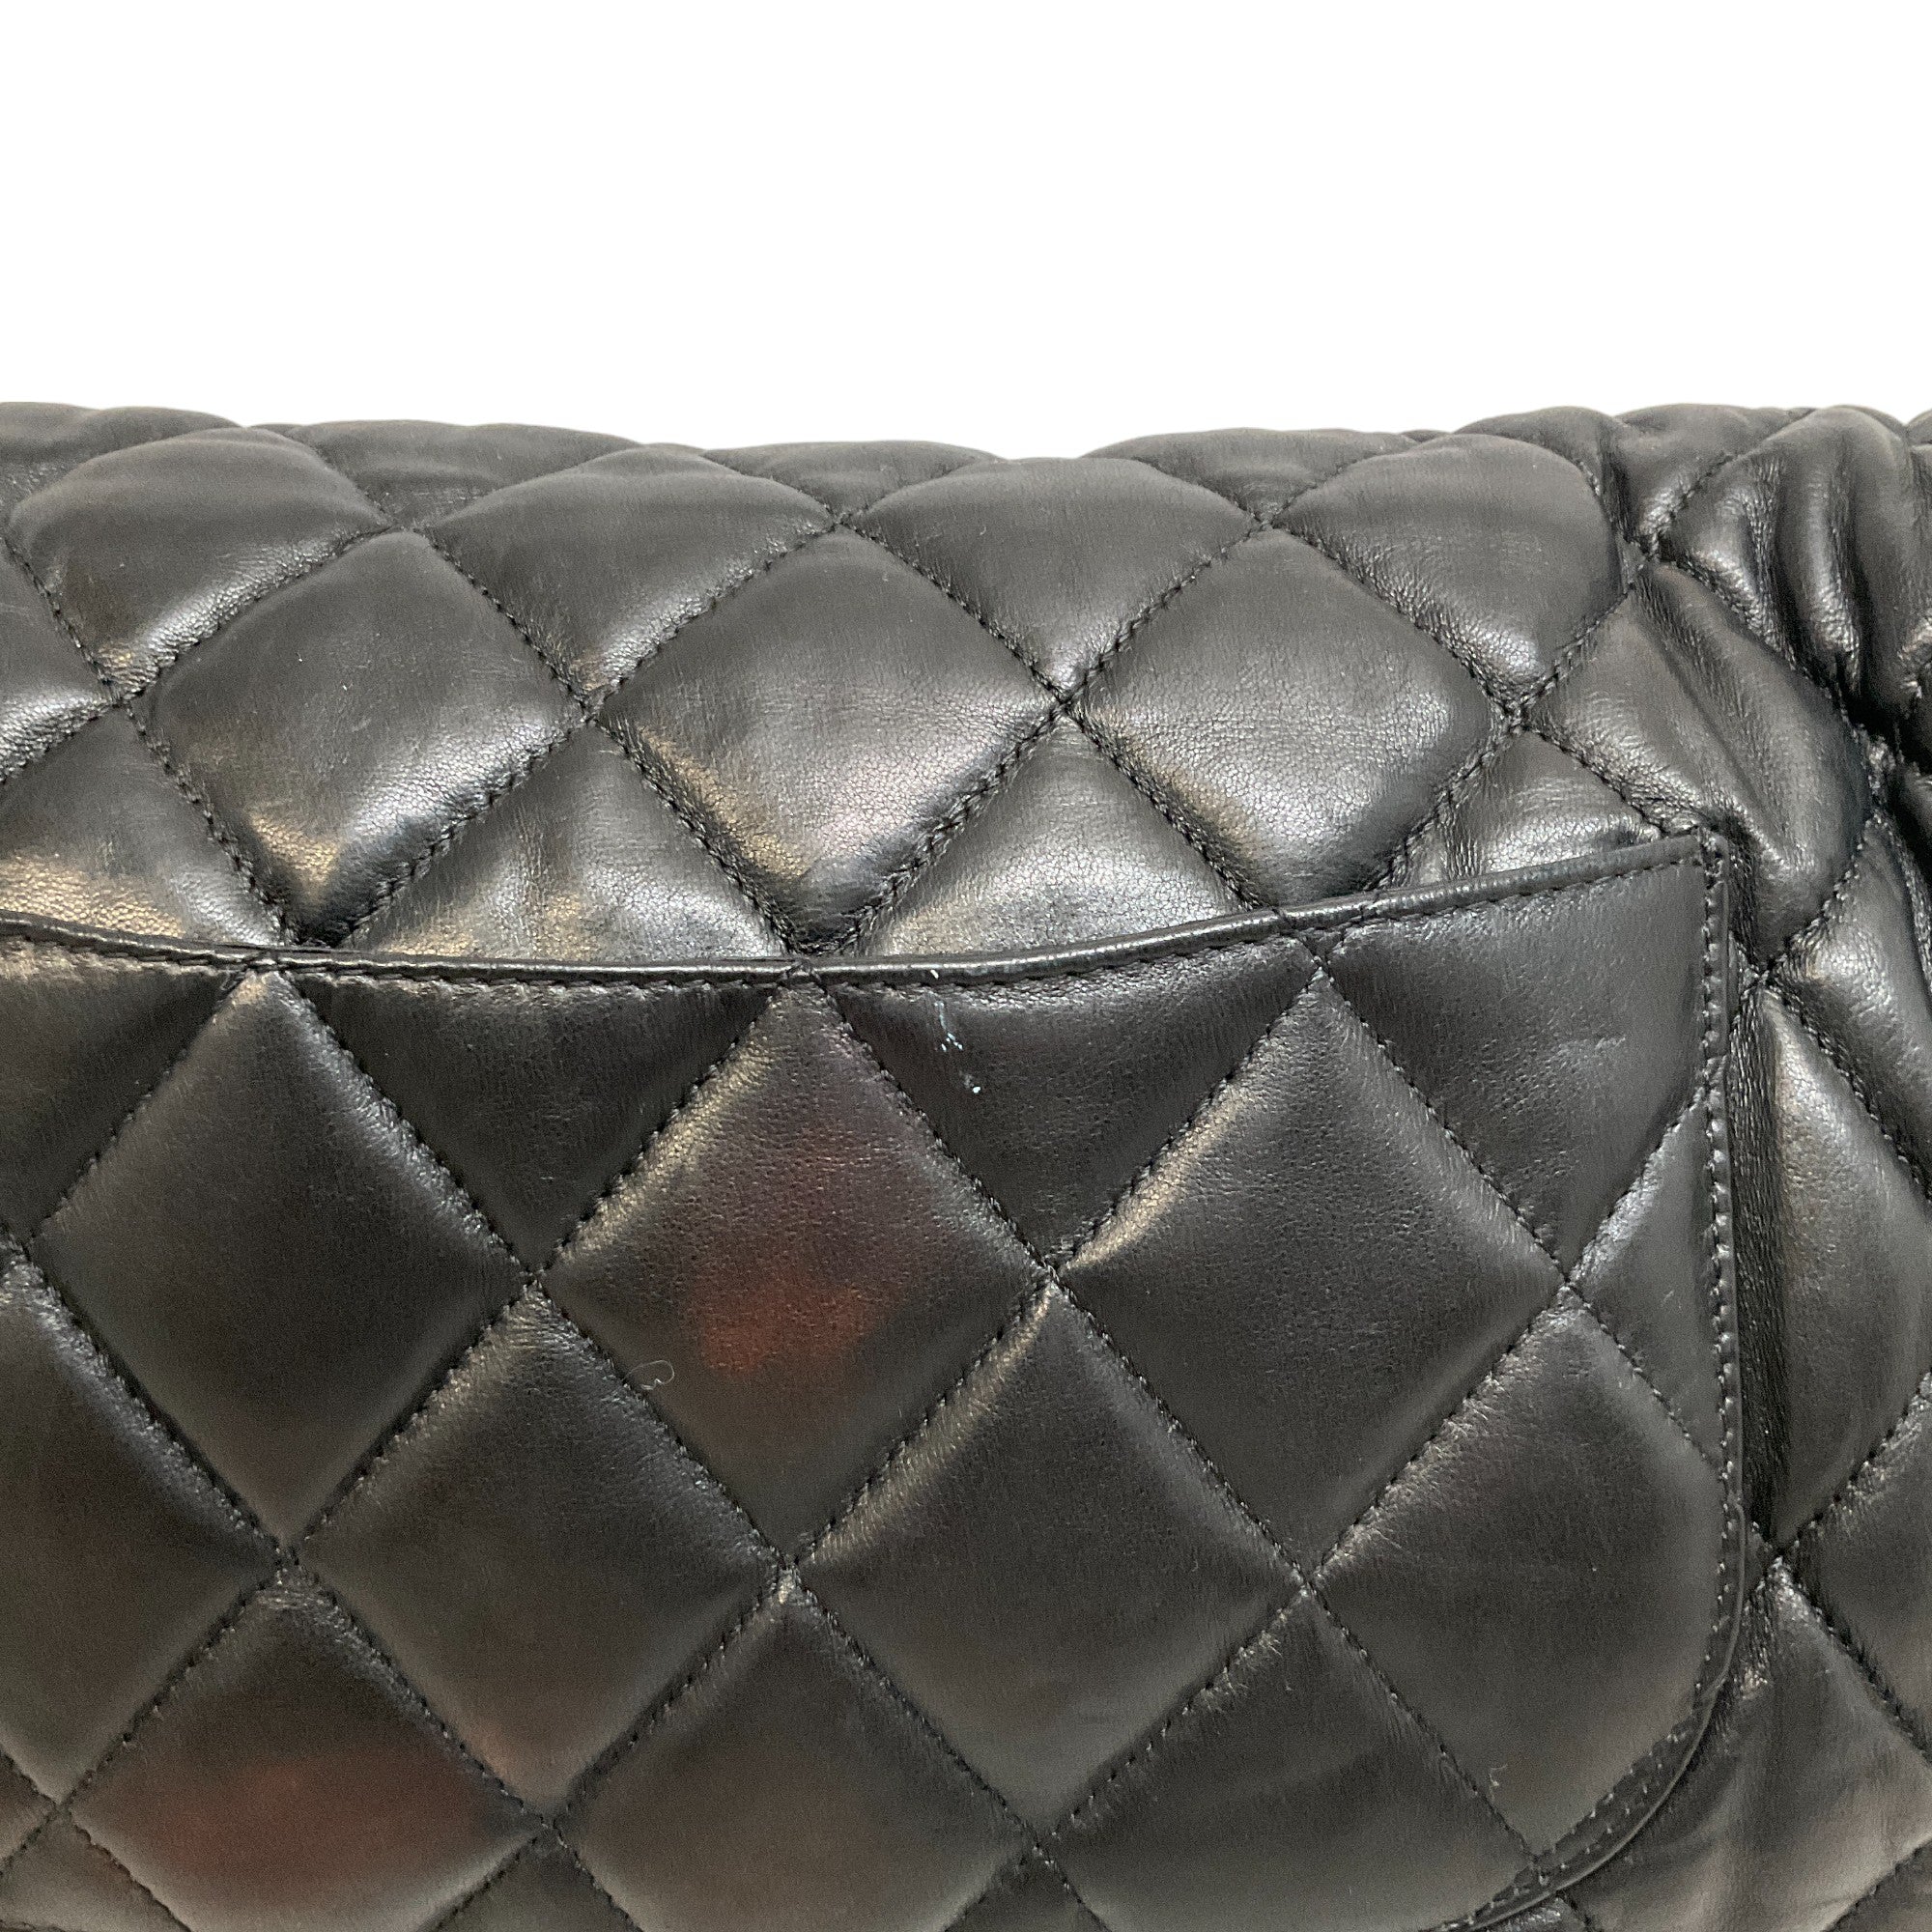 Chanel 2009-2010 Black Lambskin Leather Maxi Single Flap Bag